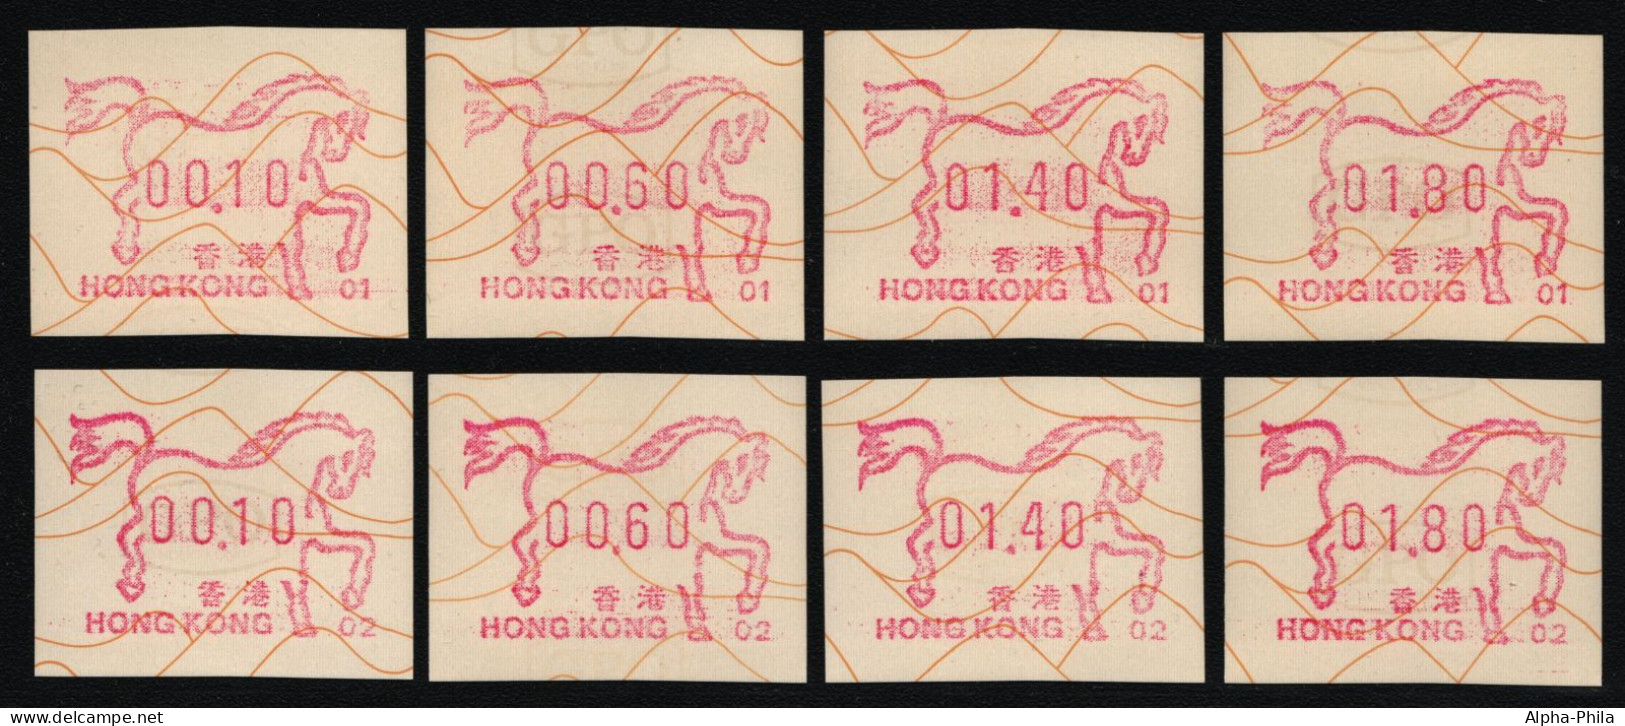 Hongkong 1990 - Mi-Nr. ATM 5 ** - MNH - Automat 01 & 02 - Je 4 Wertstufen - Automaten